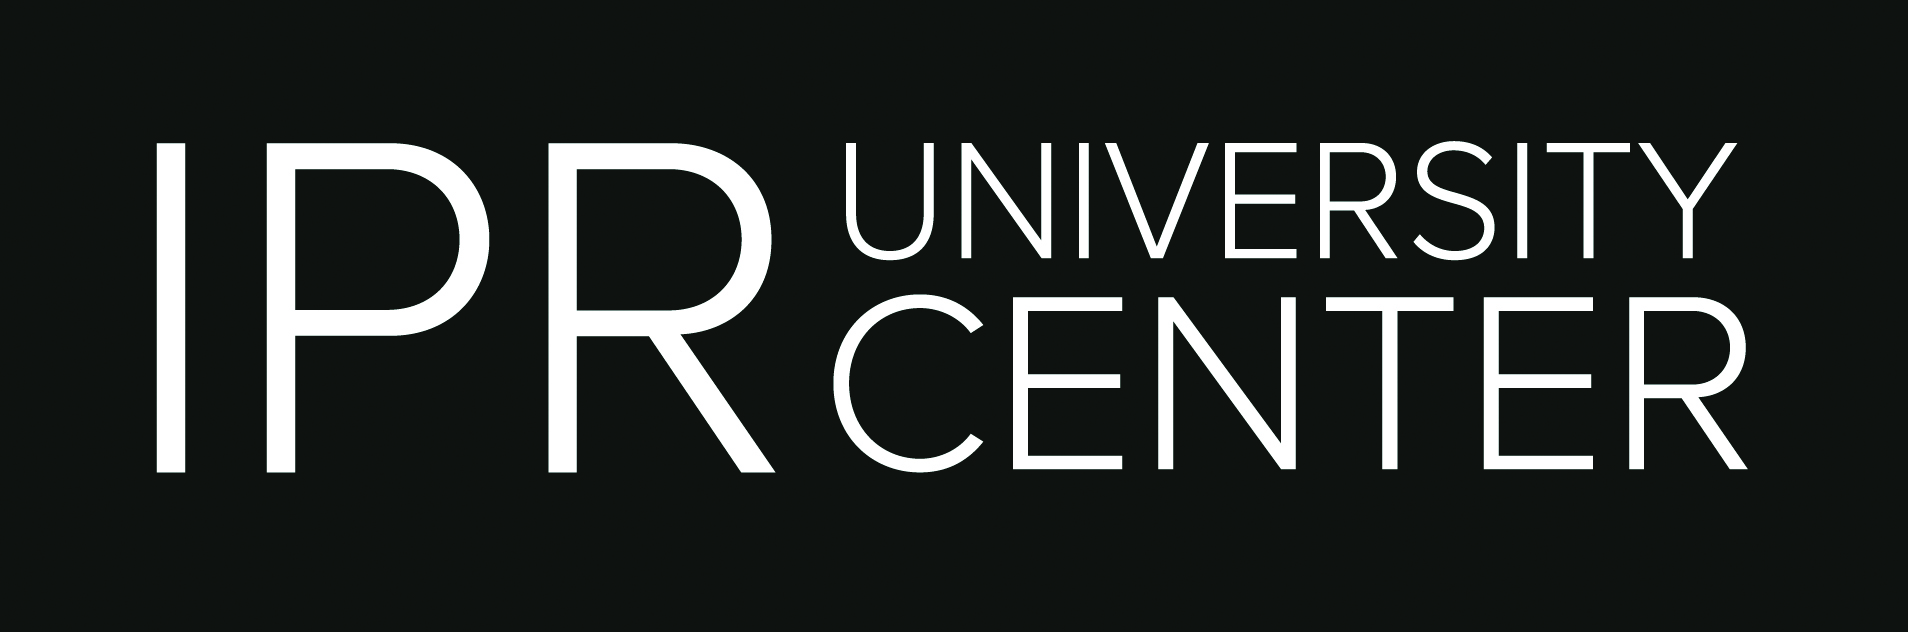 ipr-university-center-logo-cmyk-1.jpg (1.12 MB)